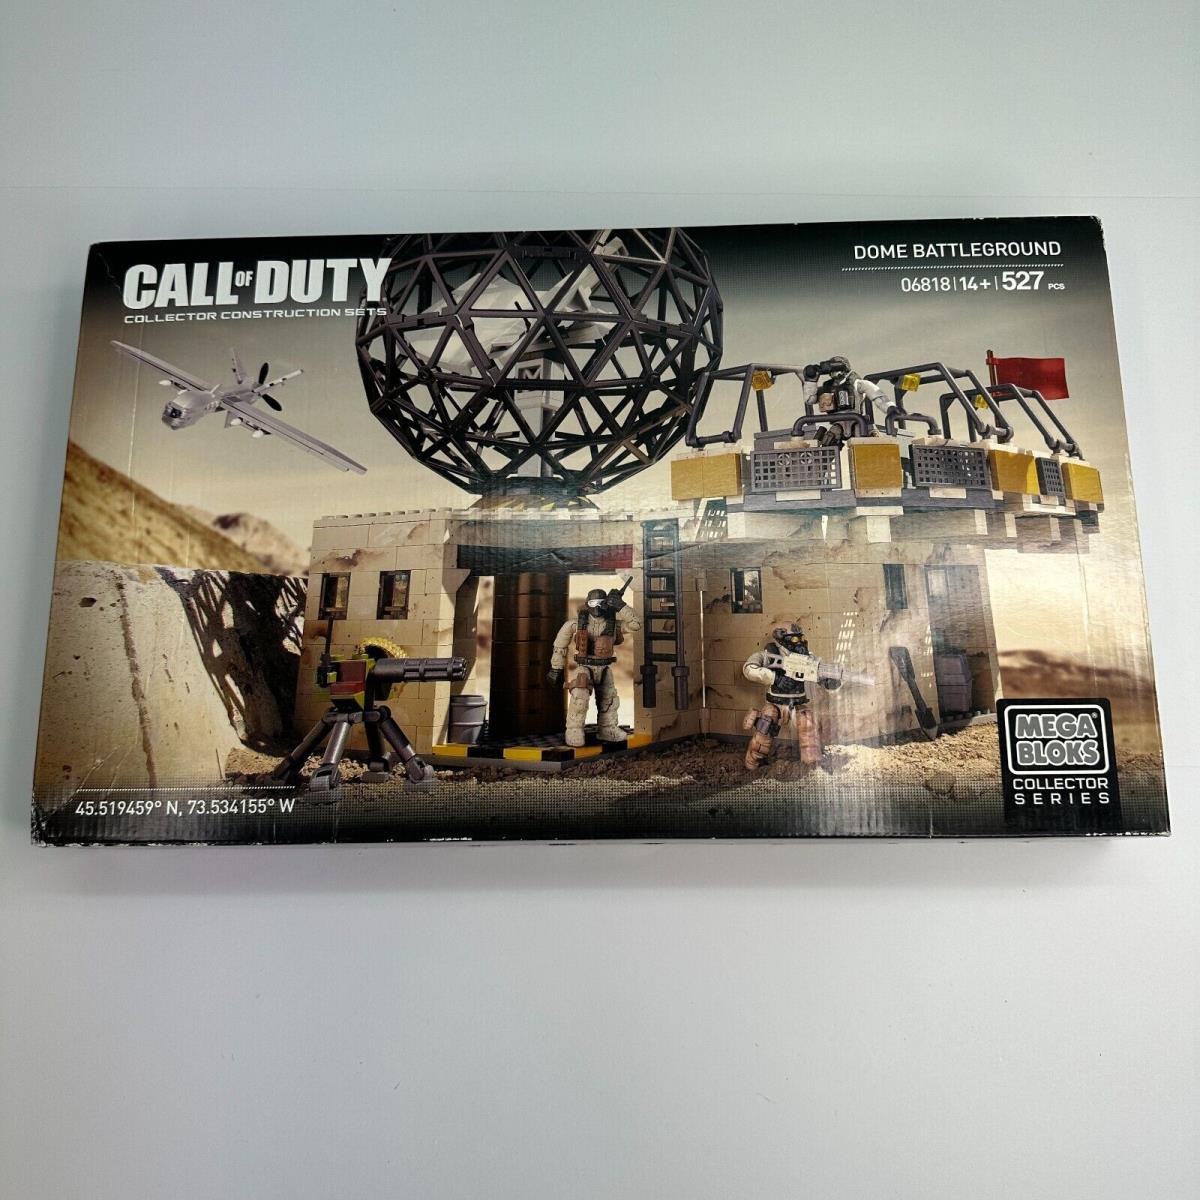 Mega Bloks Collector Series Call Of Duty Dome Battleground Set 06818 2013